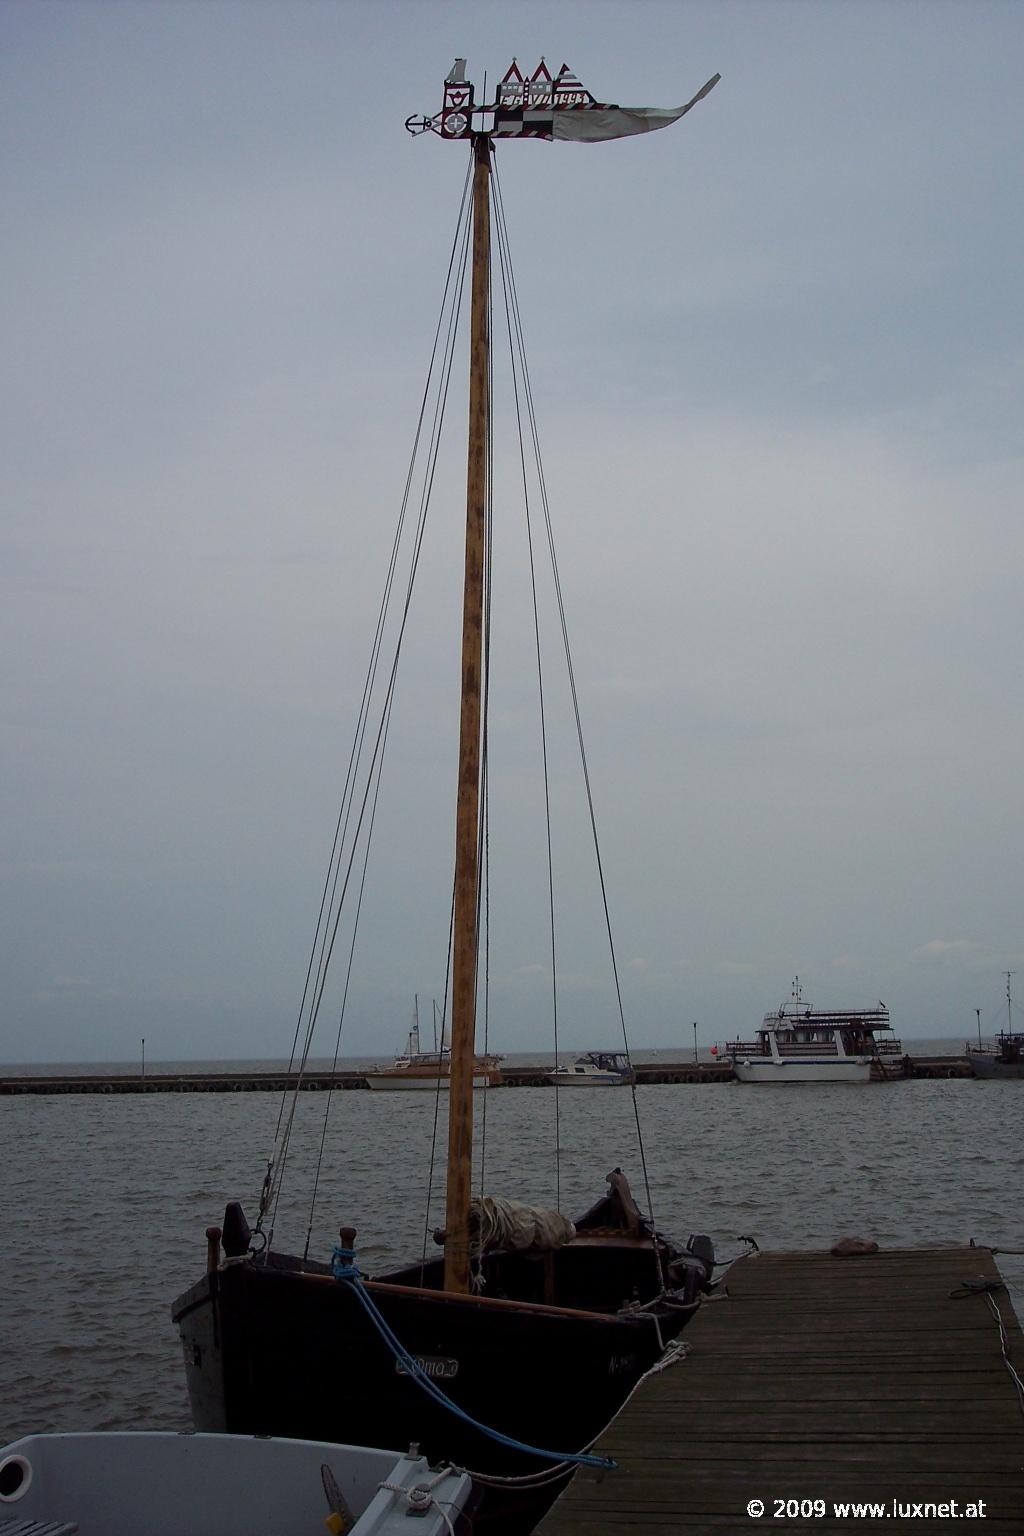 Sailingship, Nida